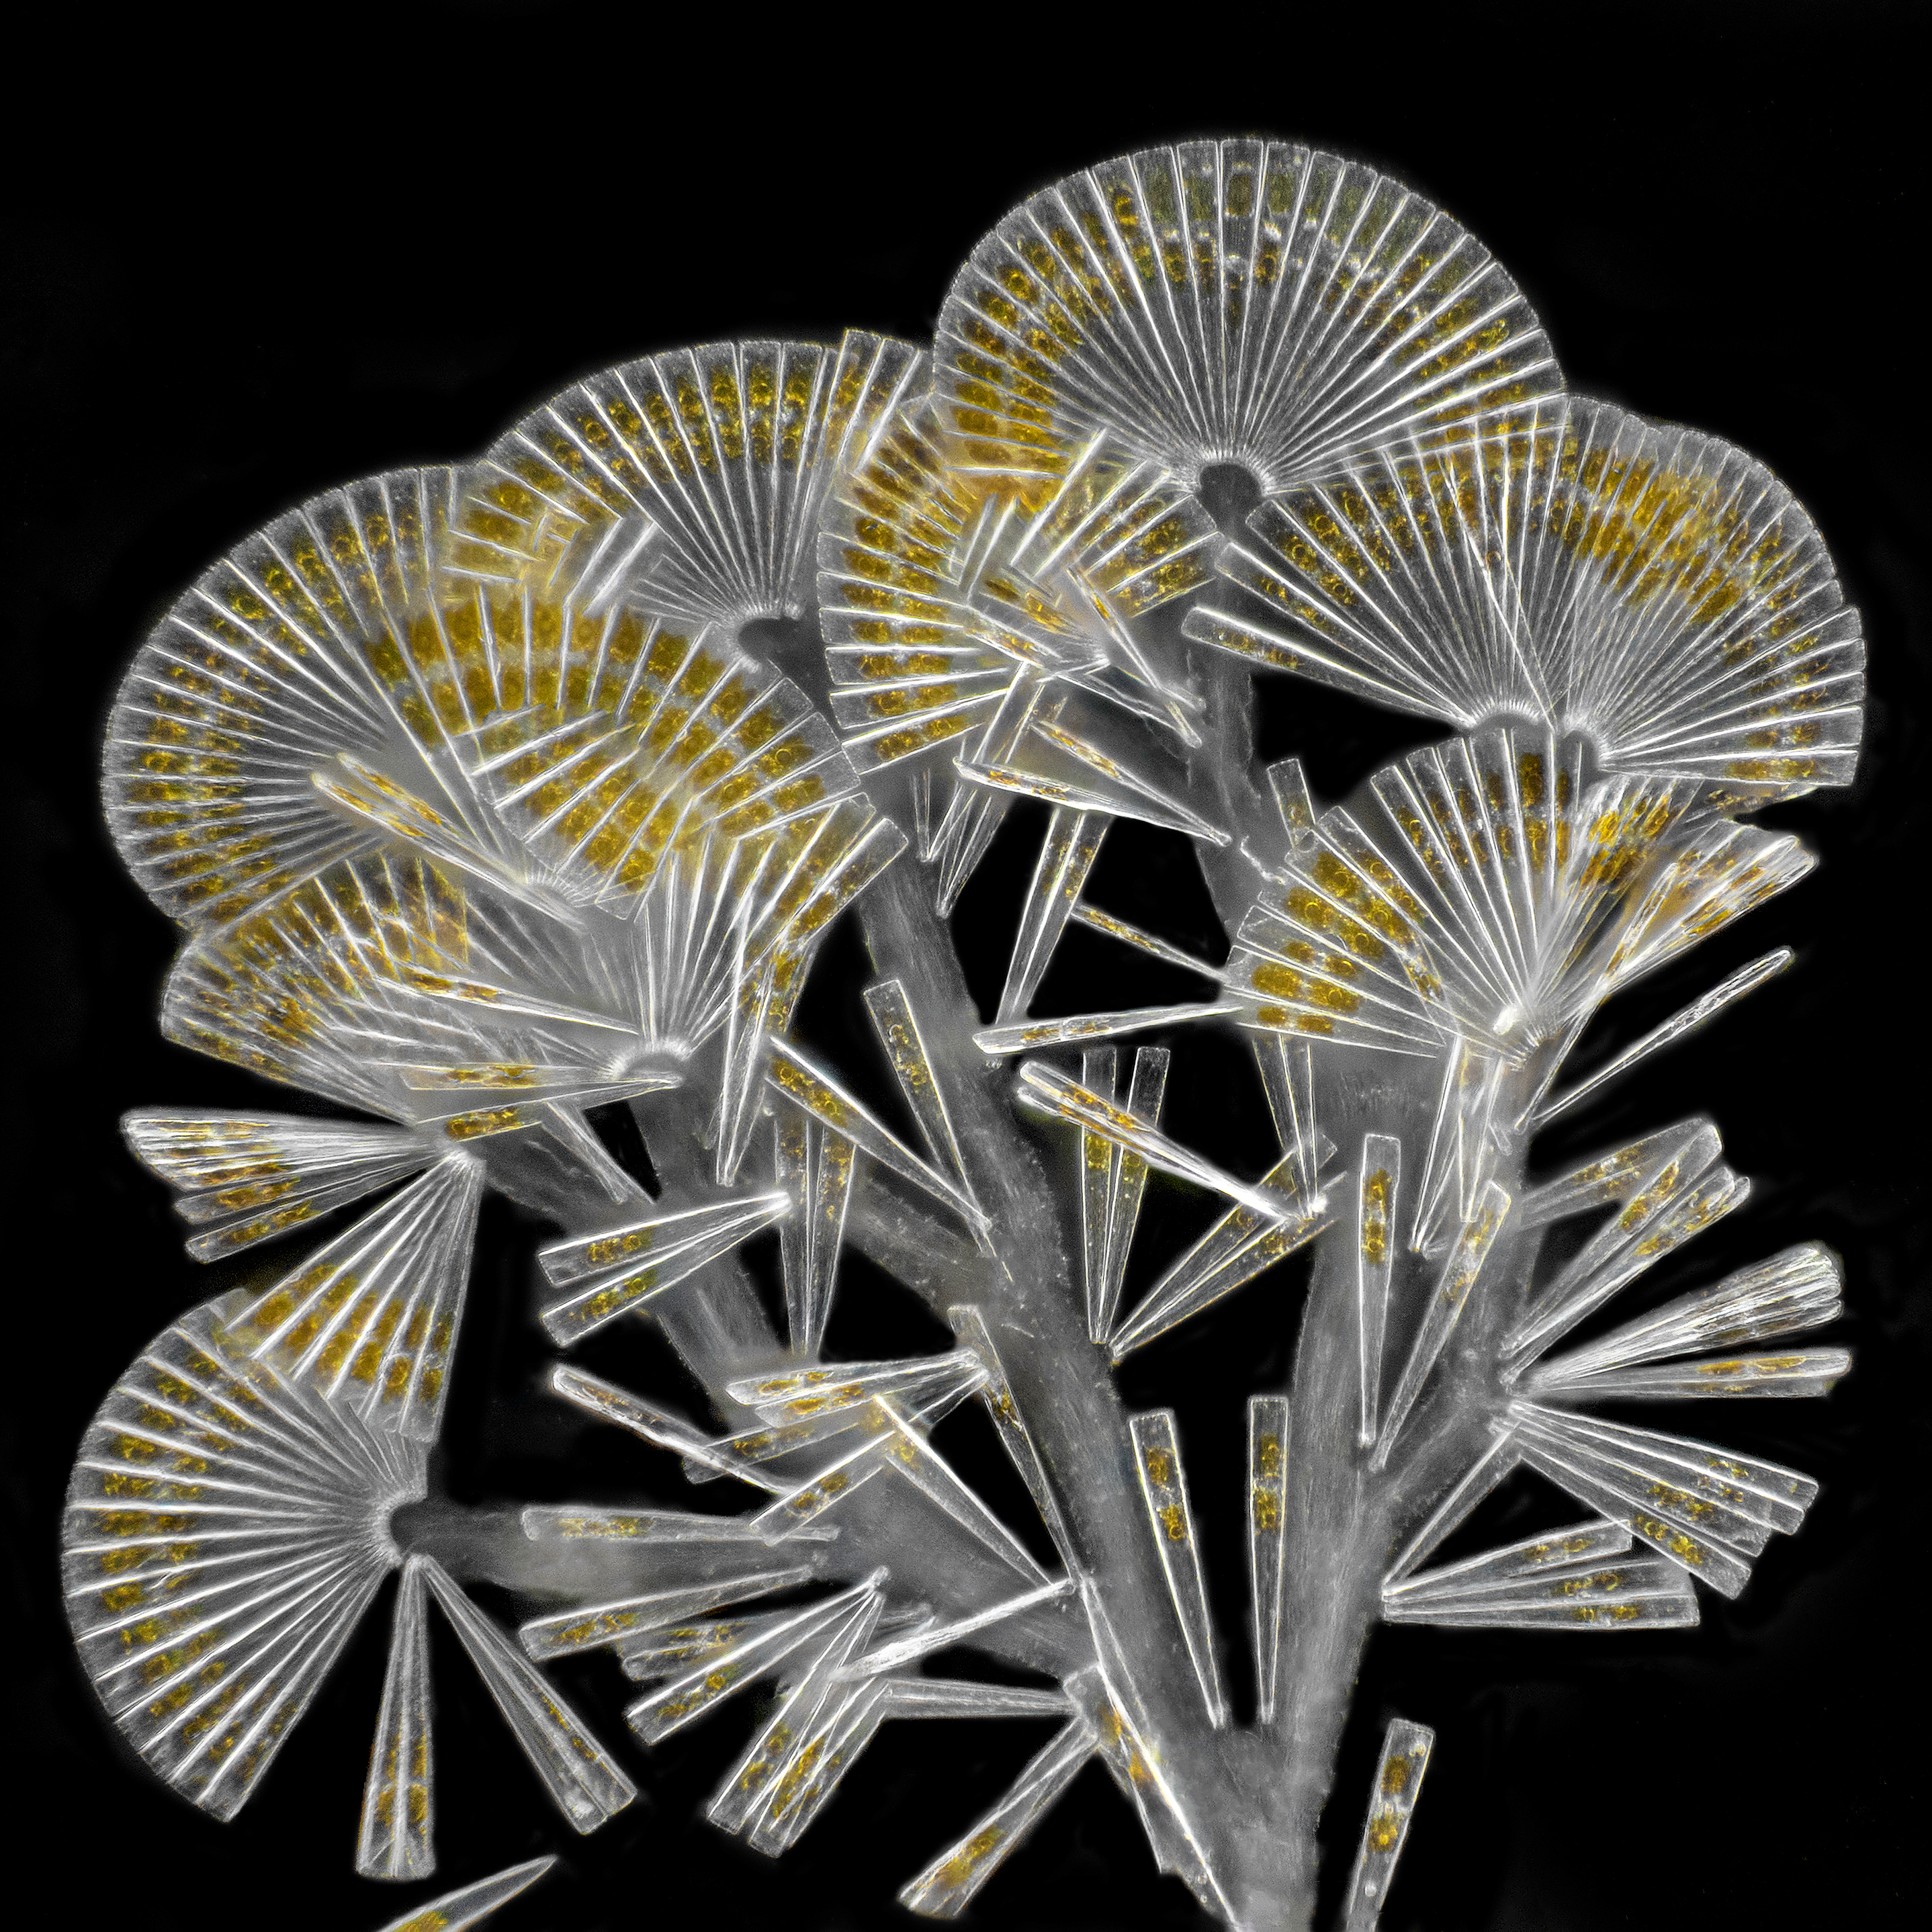 Colonial diatoms